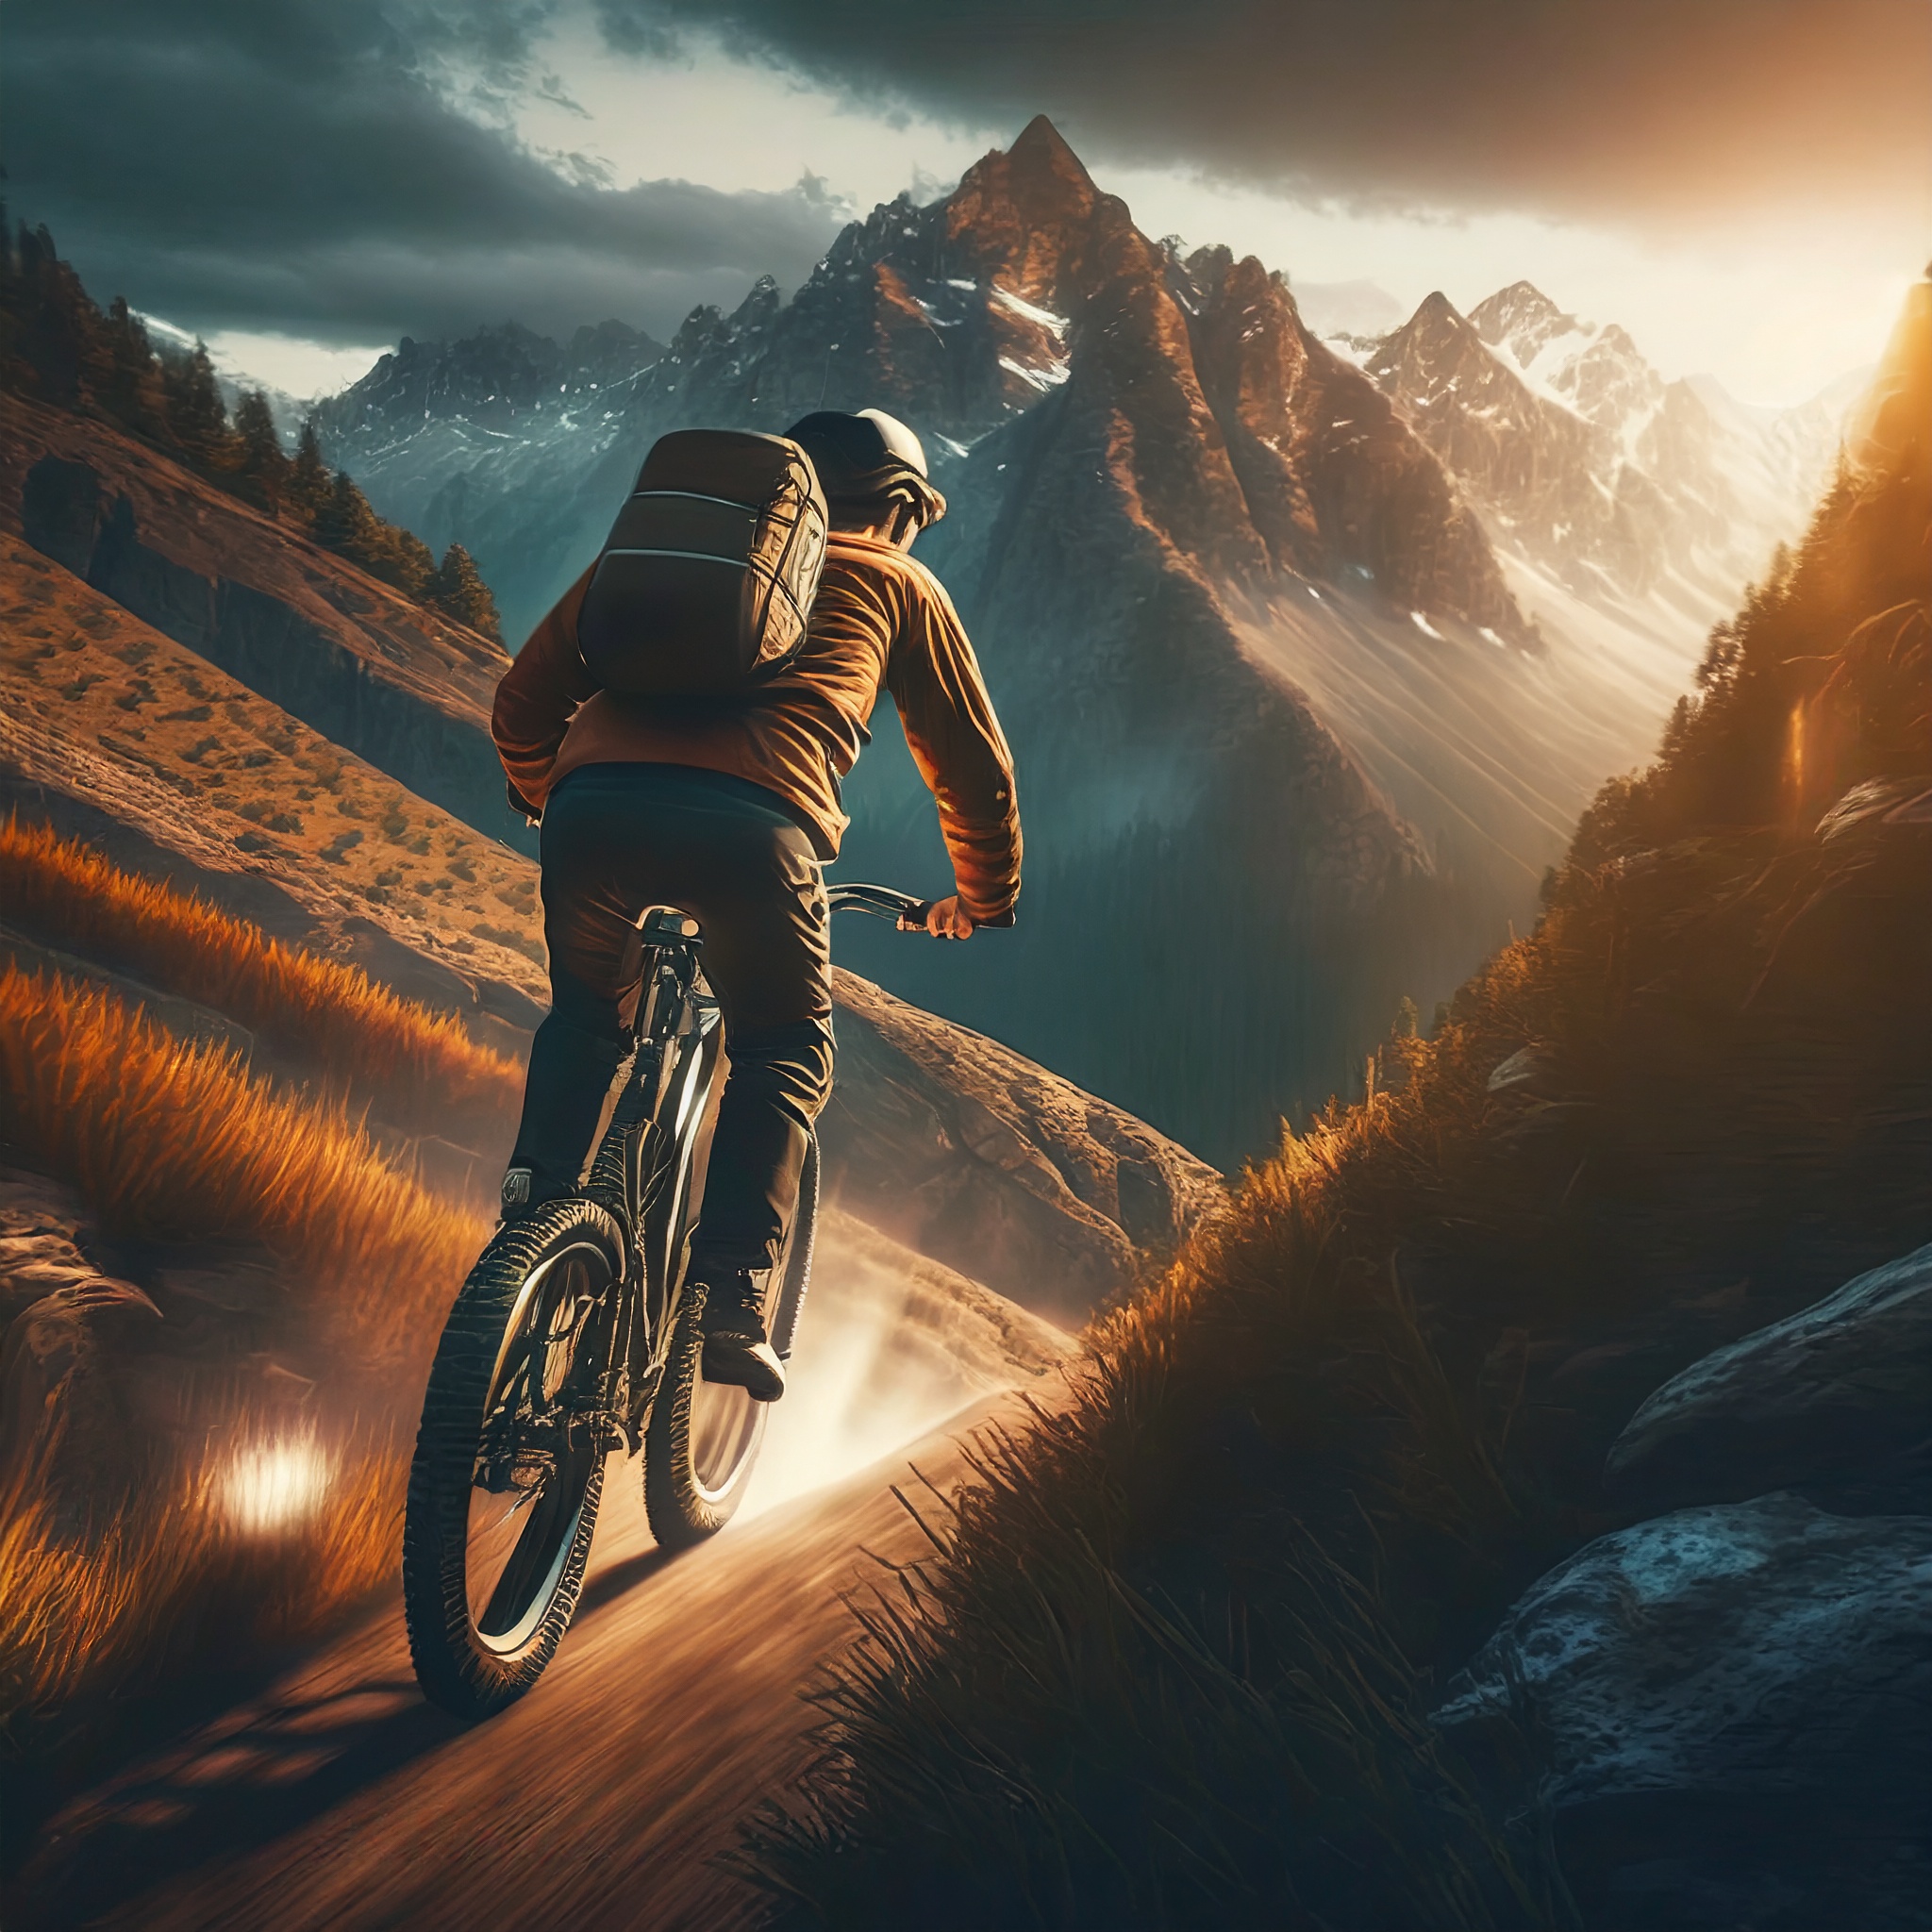 Joshua Bach riding a mountain bike. Image created by Adobe Firefly.